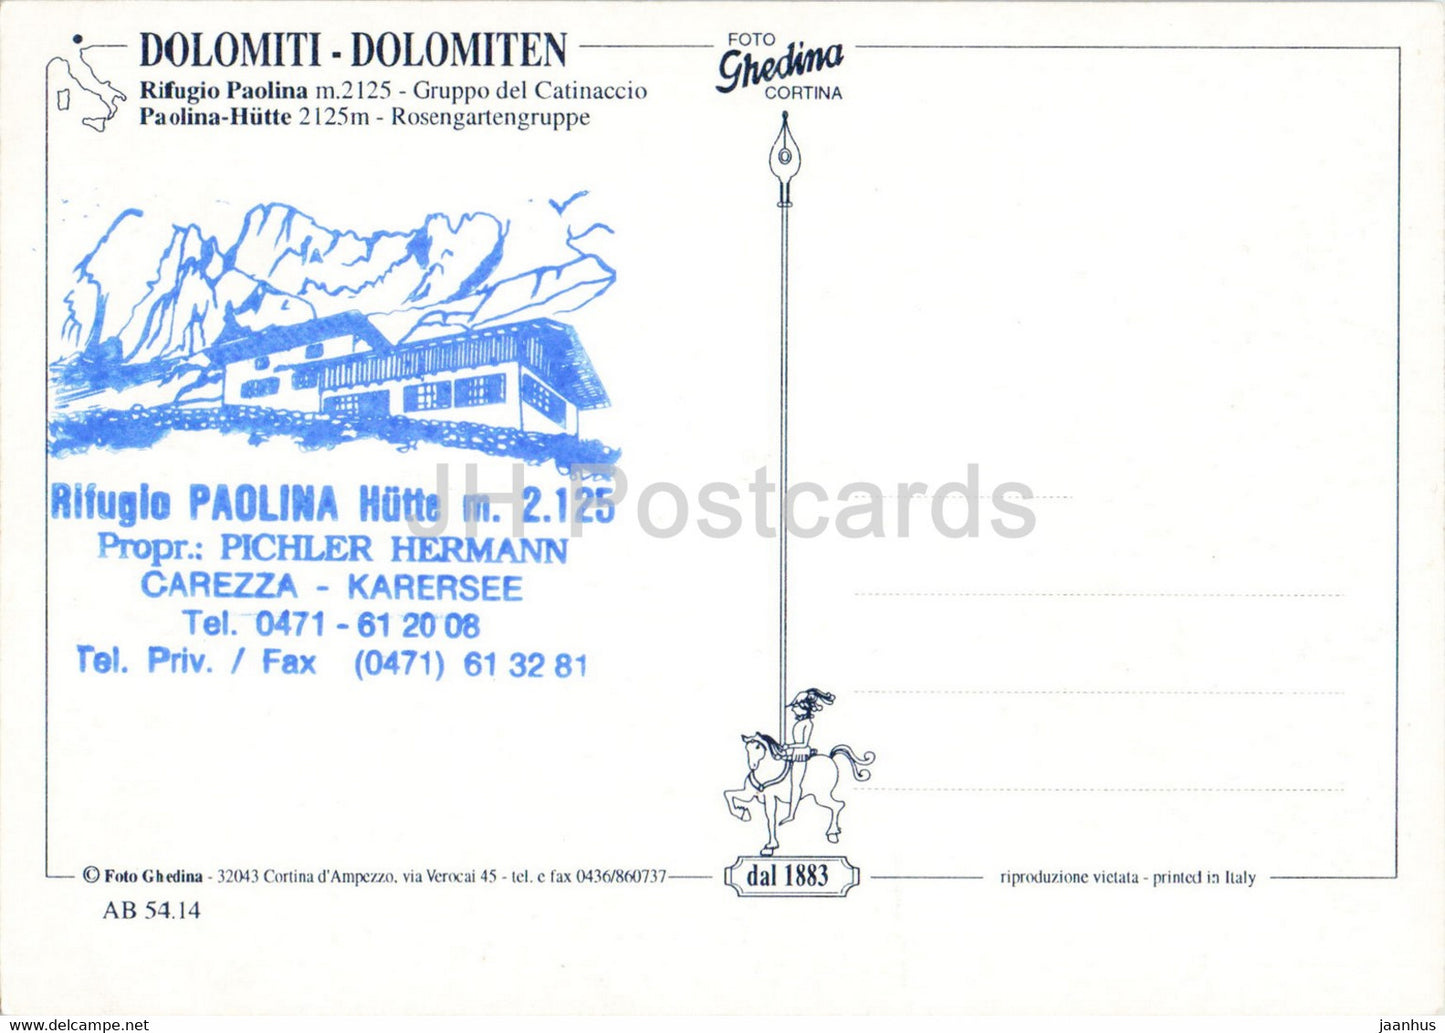 Dolomiti - Rifugio Paolina Hutte - Rosengarten - Rosengarten - Italien - unbenutzt